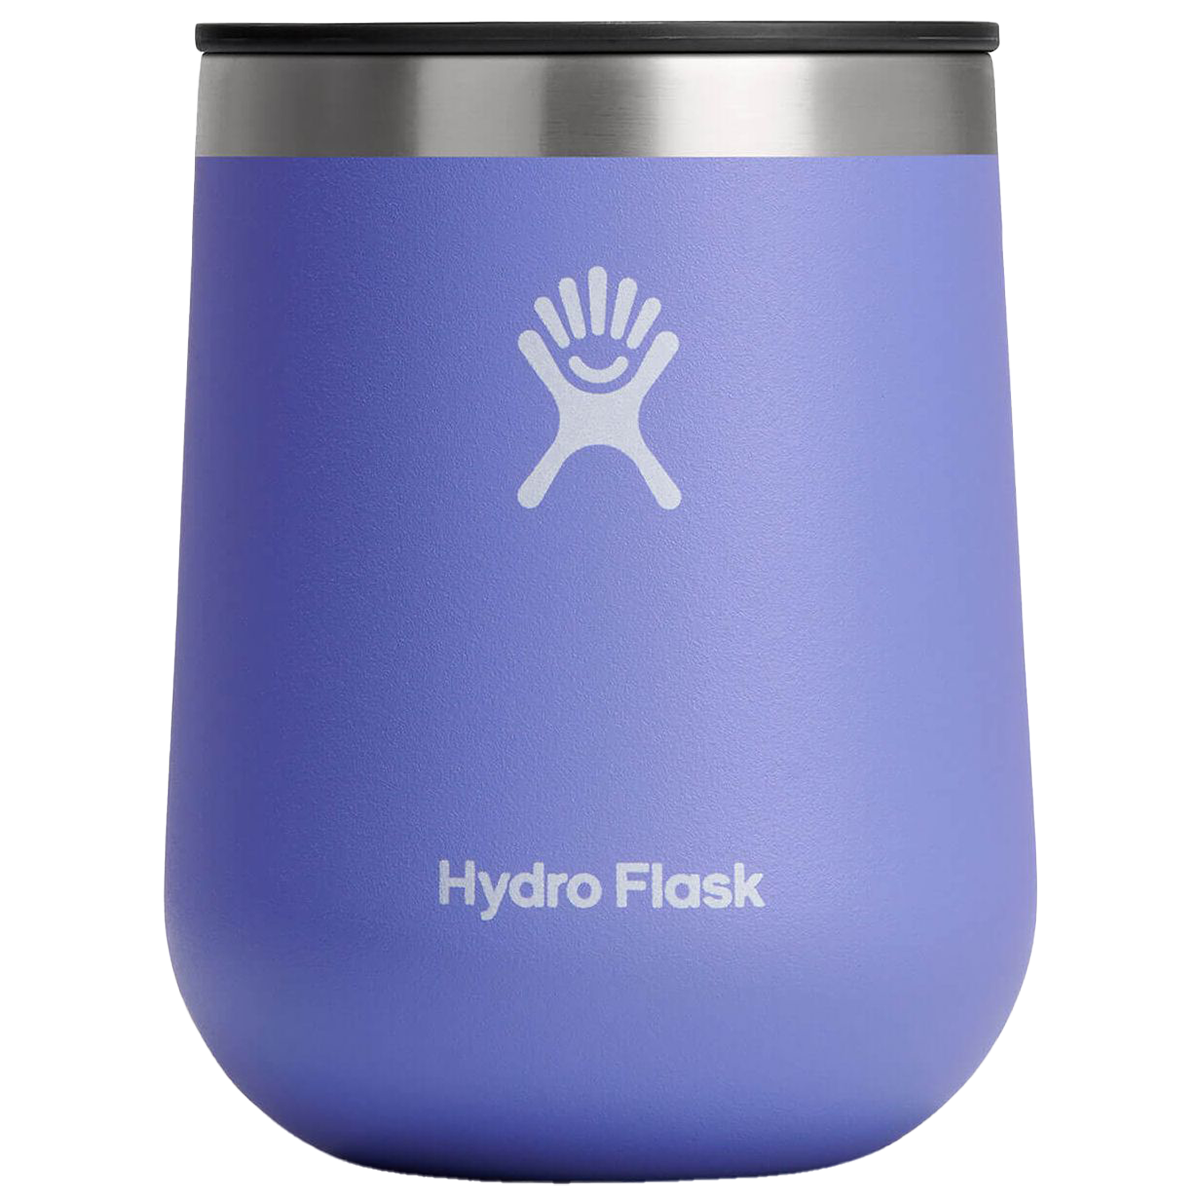 Hydro Flask 10 oz Wine Tumbler Lid